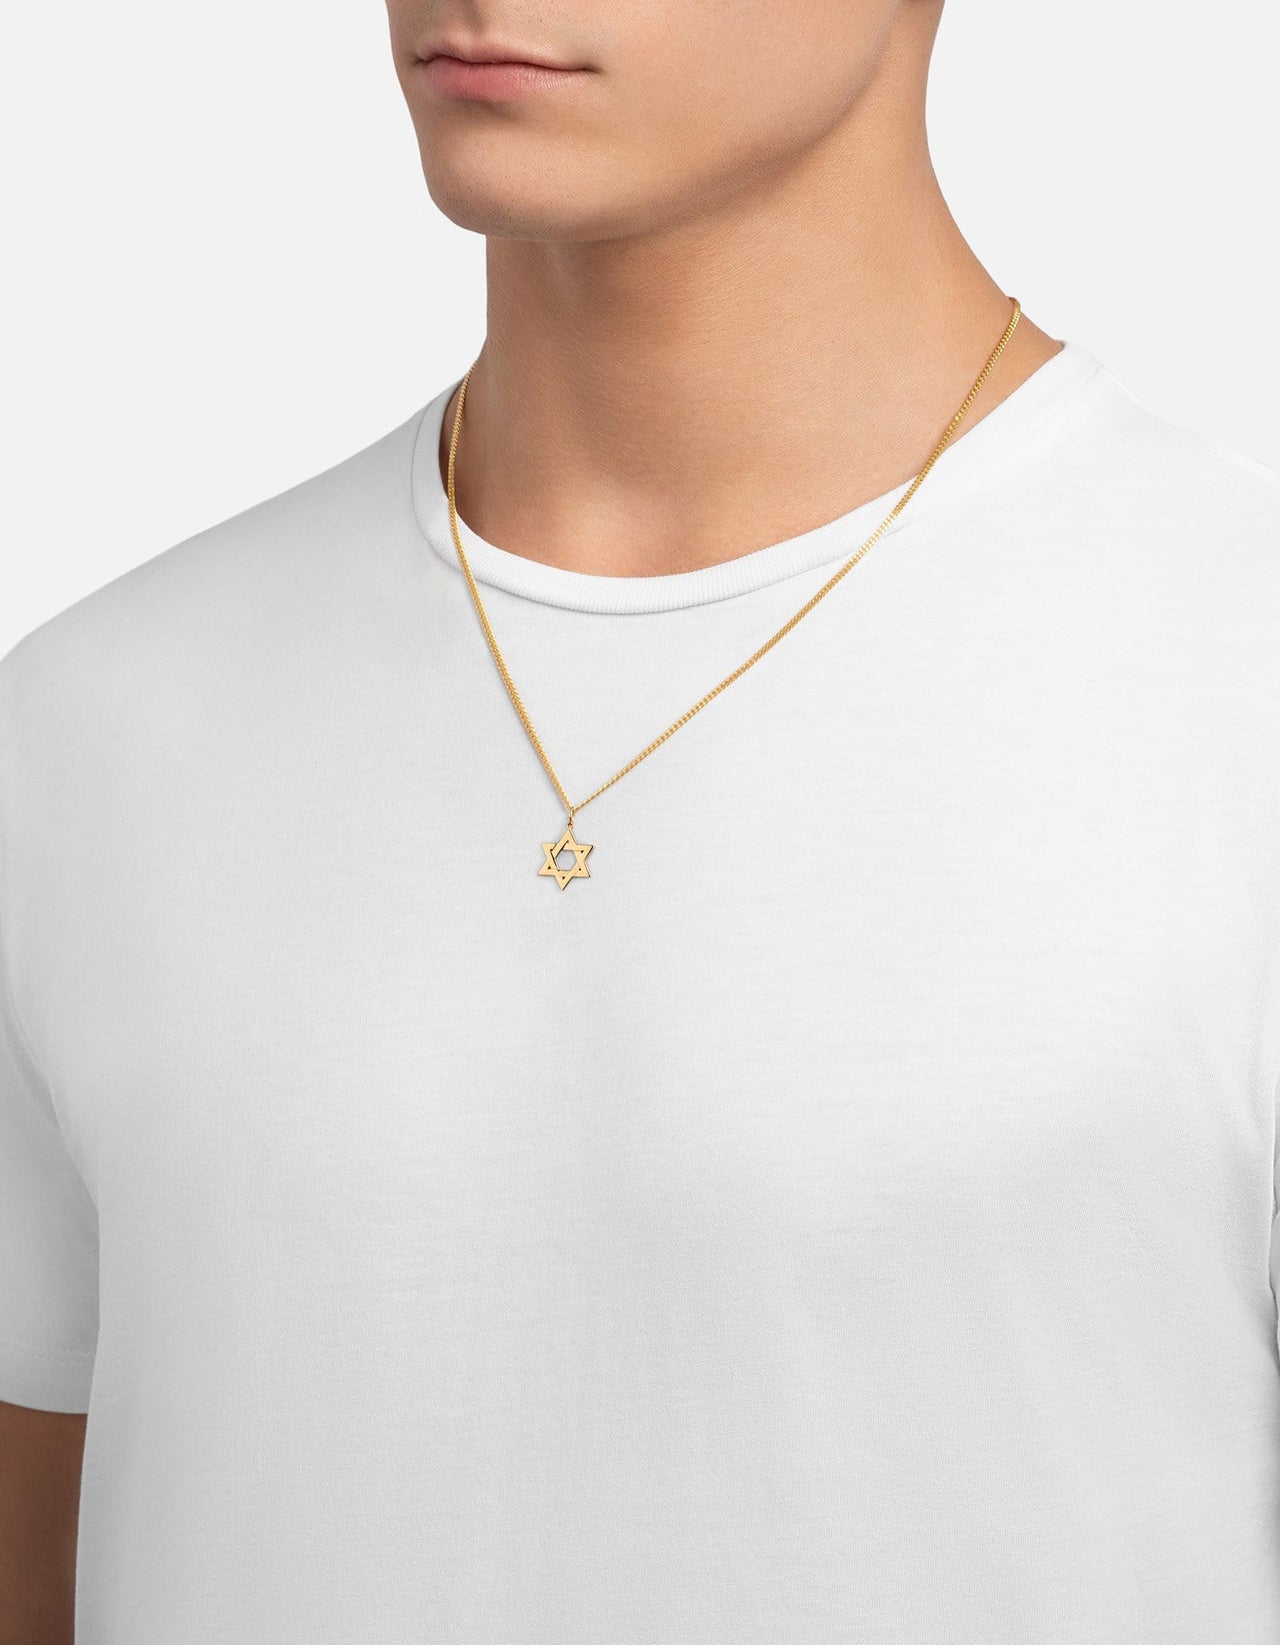 Miansai Men's 3mm Cuban Chain Necklace, 14K Matte Gold, Size 24 in.